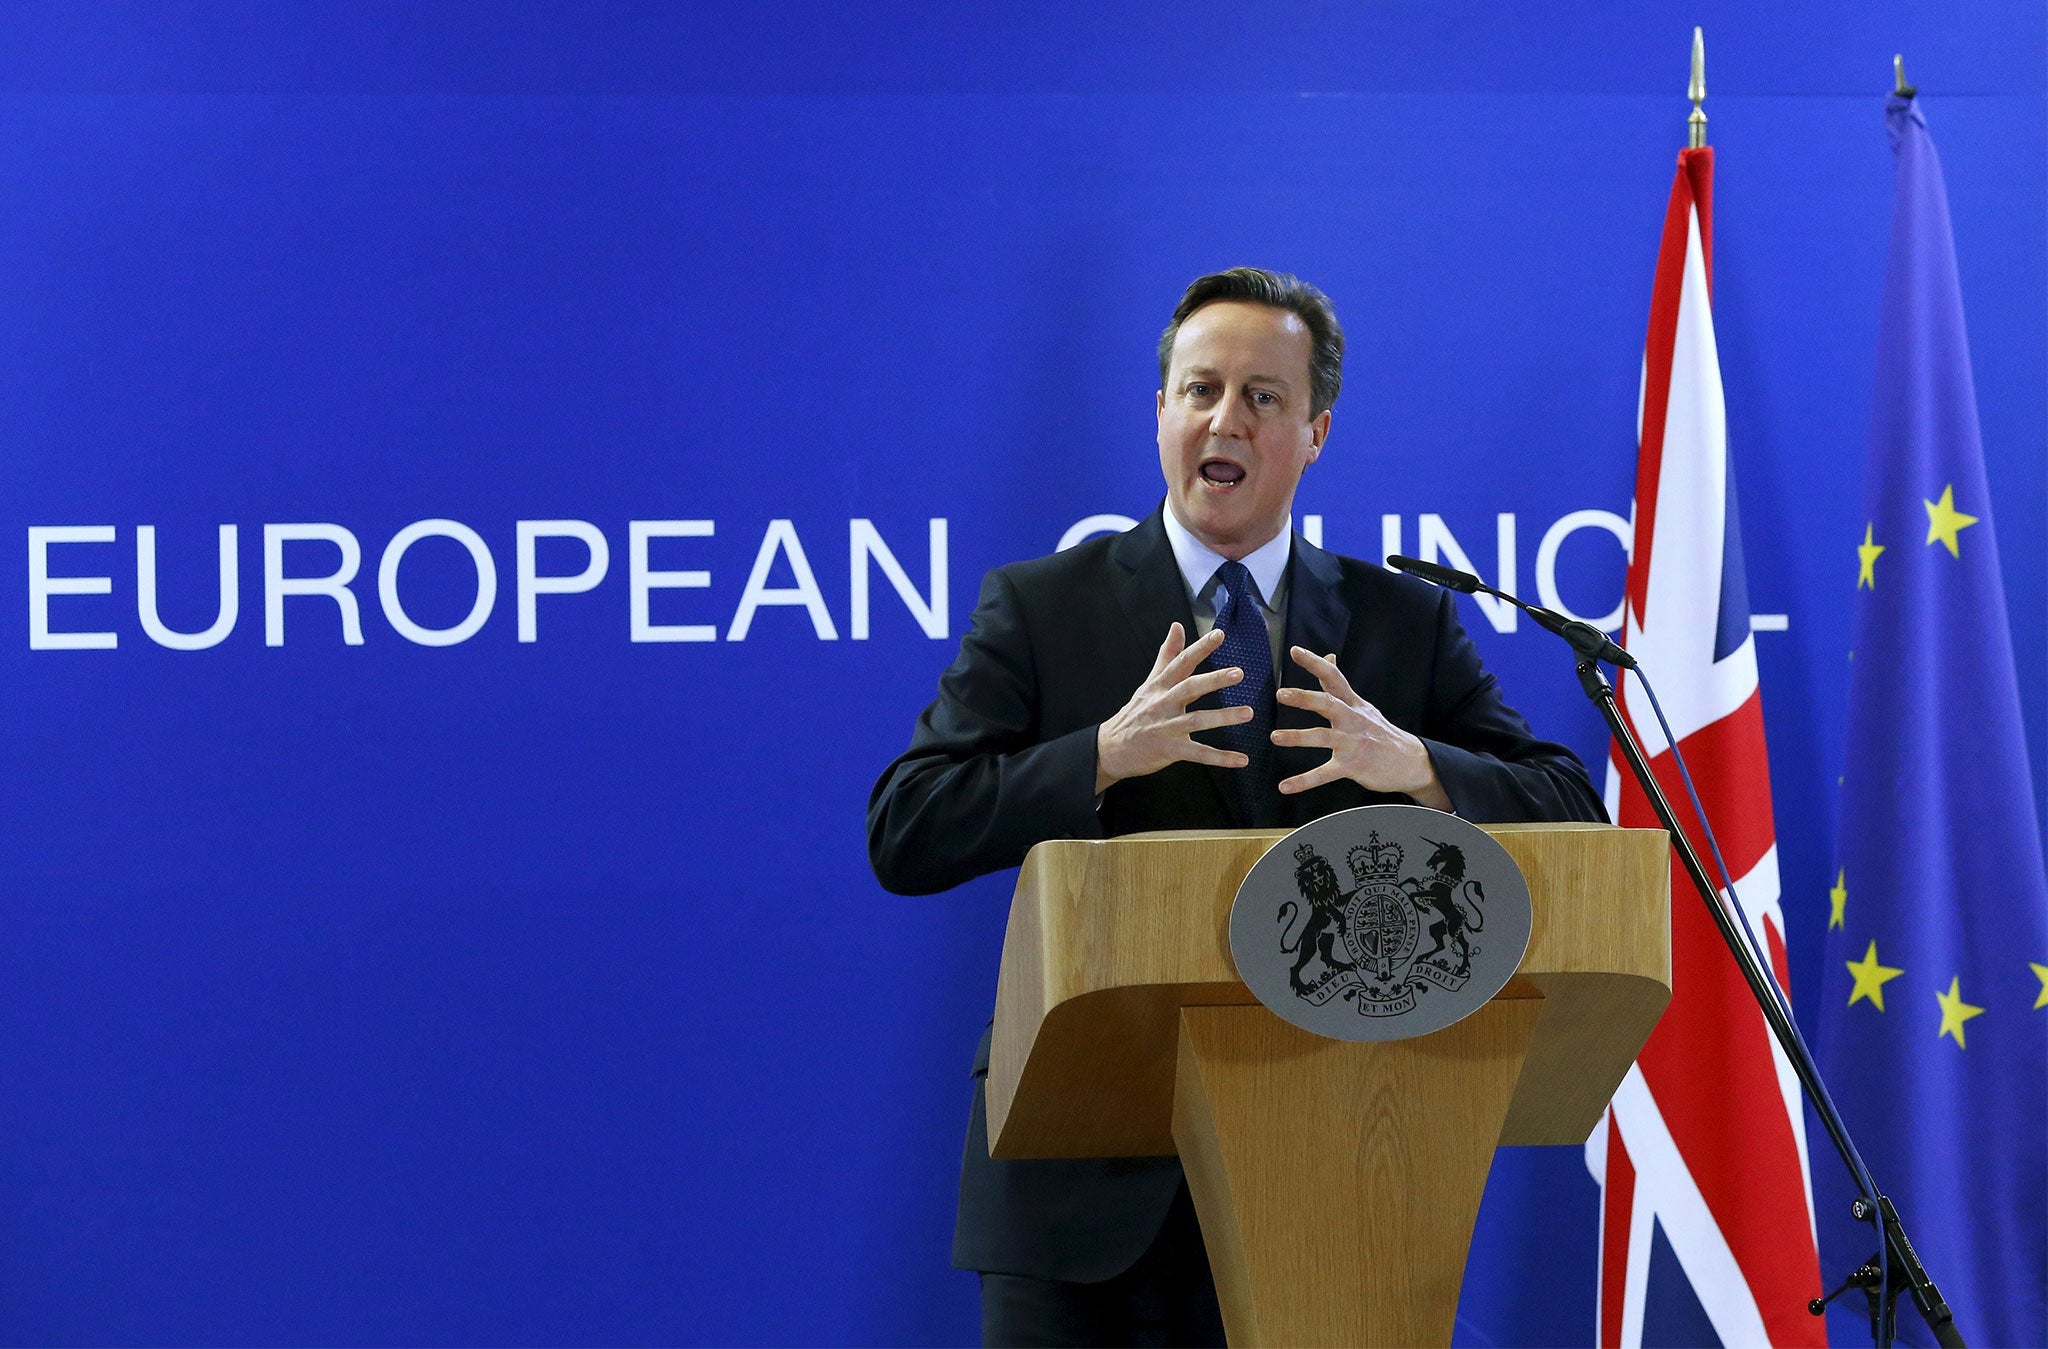 David Cameron described talks with EU leaders as 'lively'